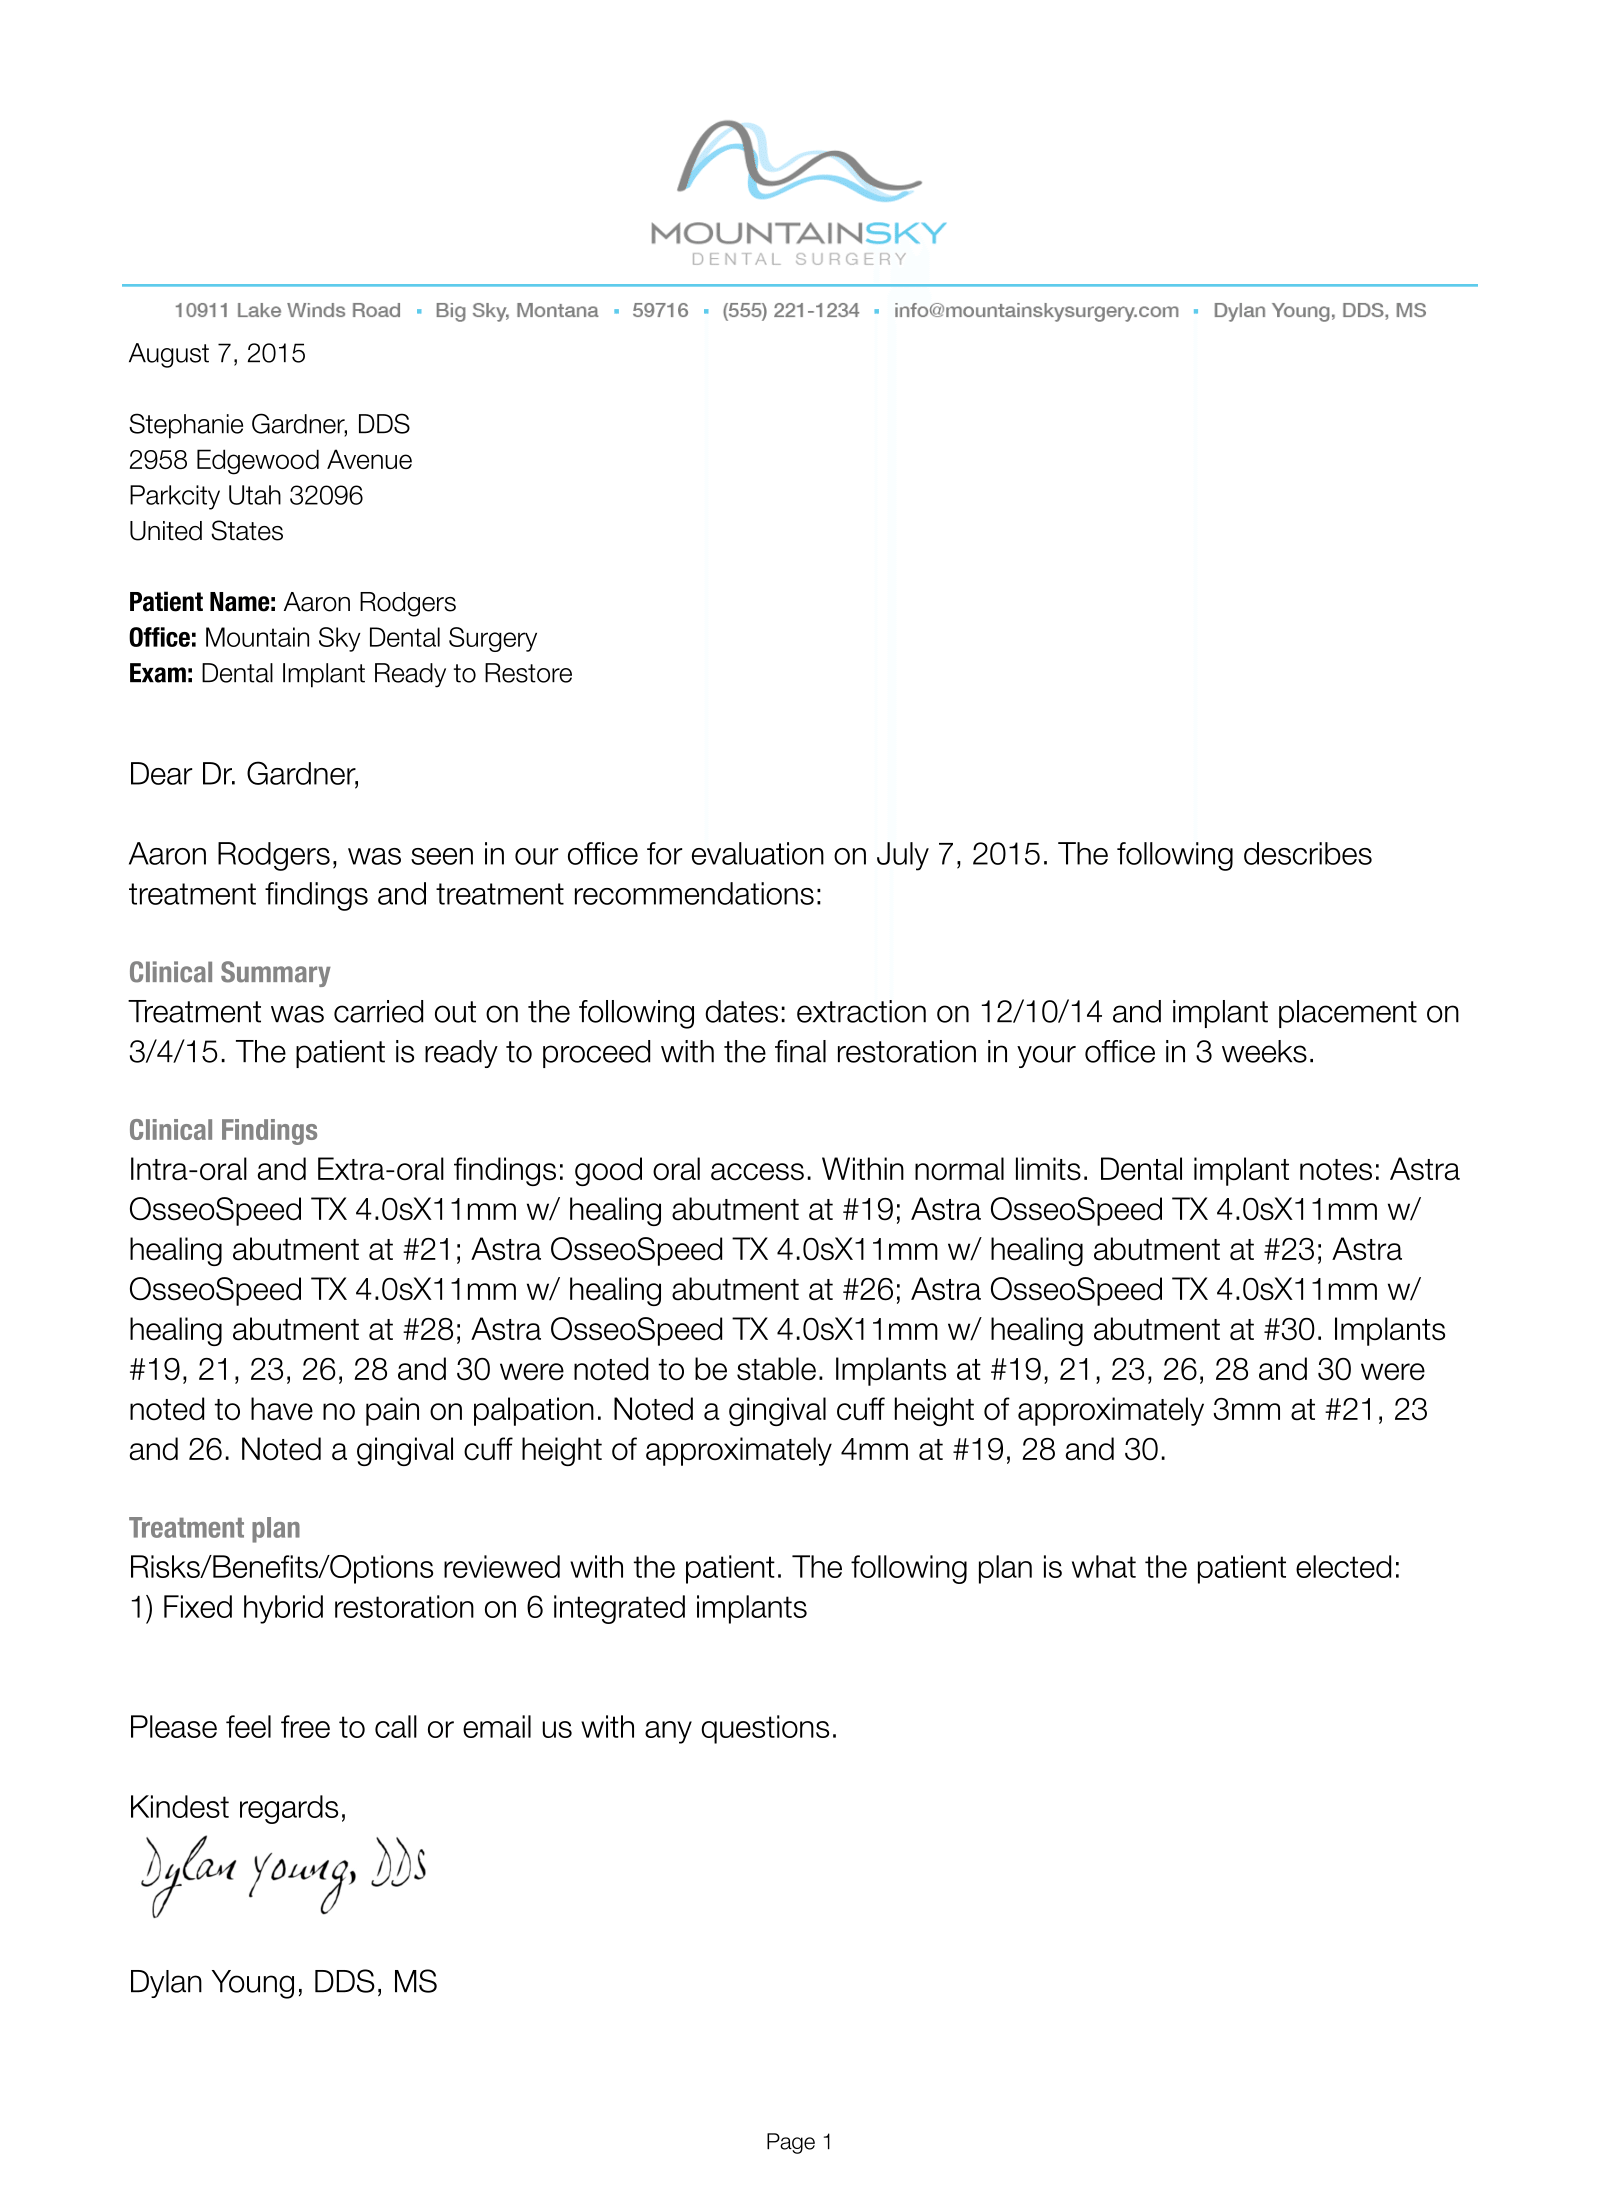 Medical Referral Letter Template from fastnotesapp.com